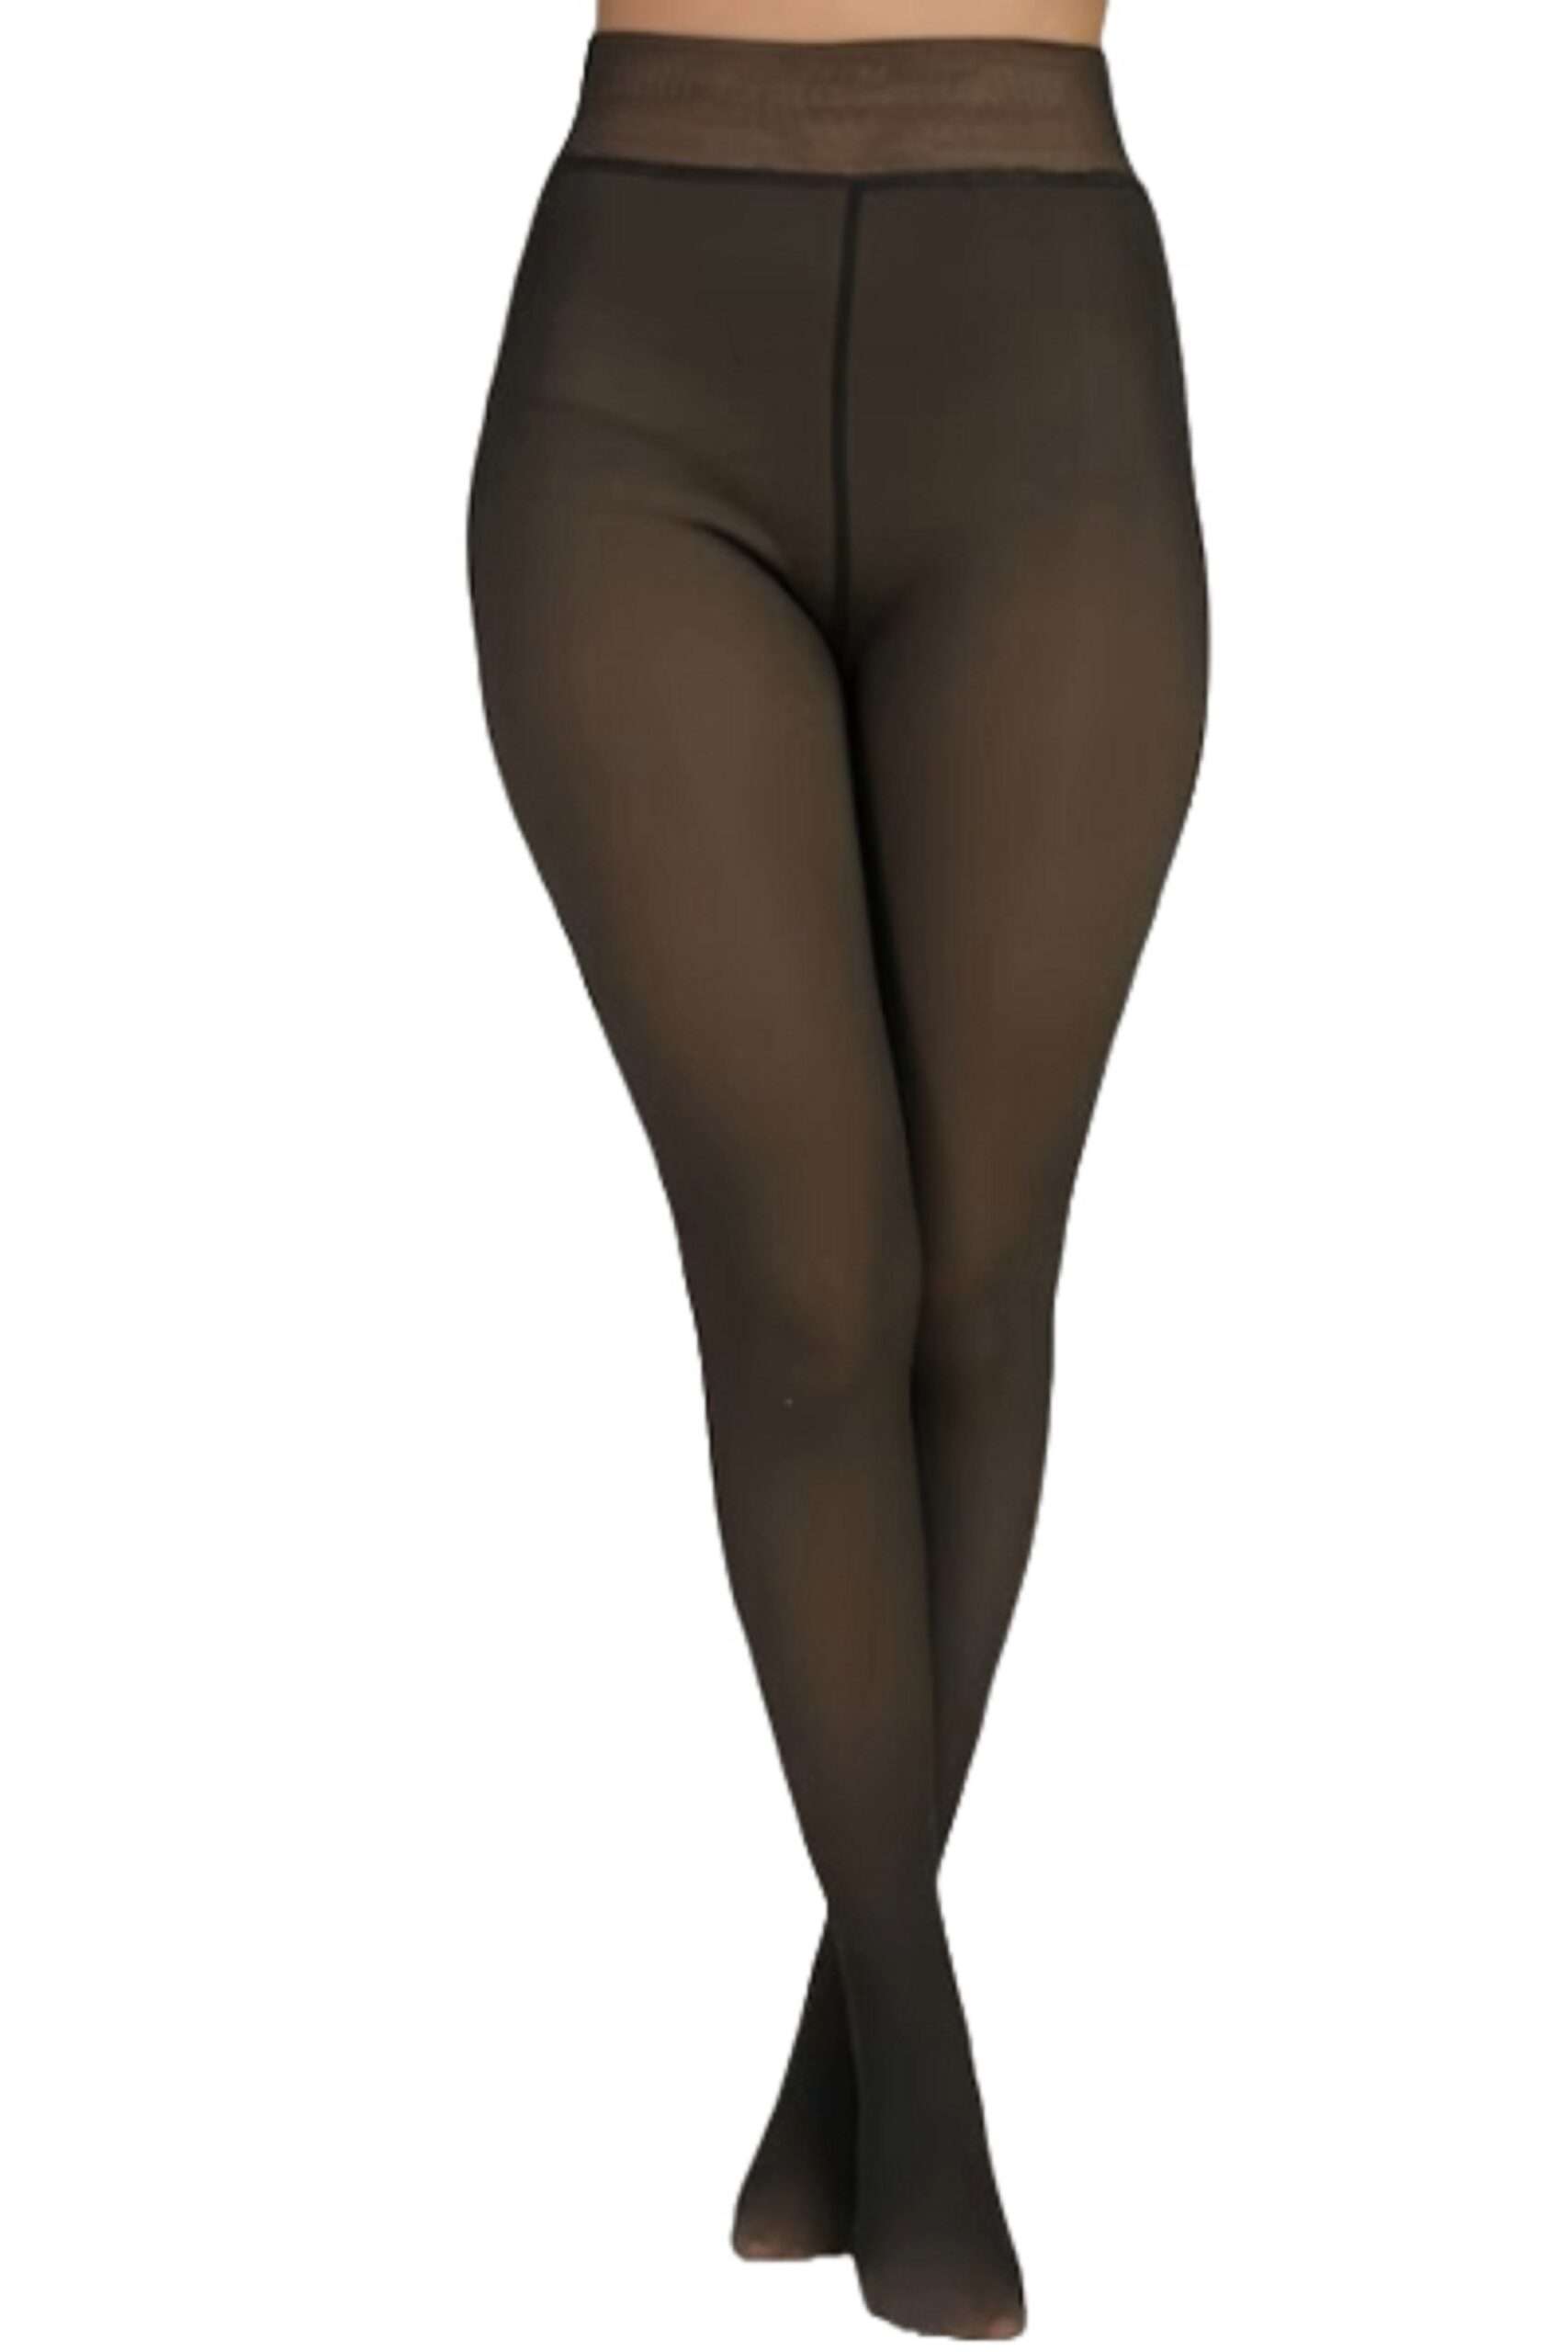 SELETA-Fur-Lined Pantyhose Stockings For Women